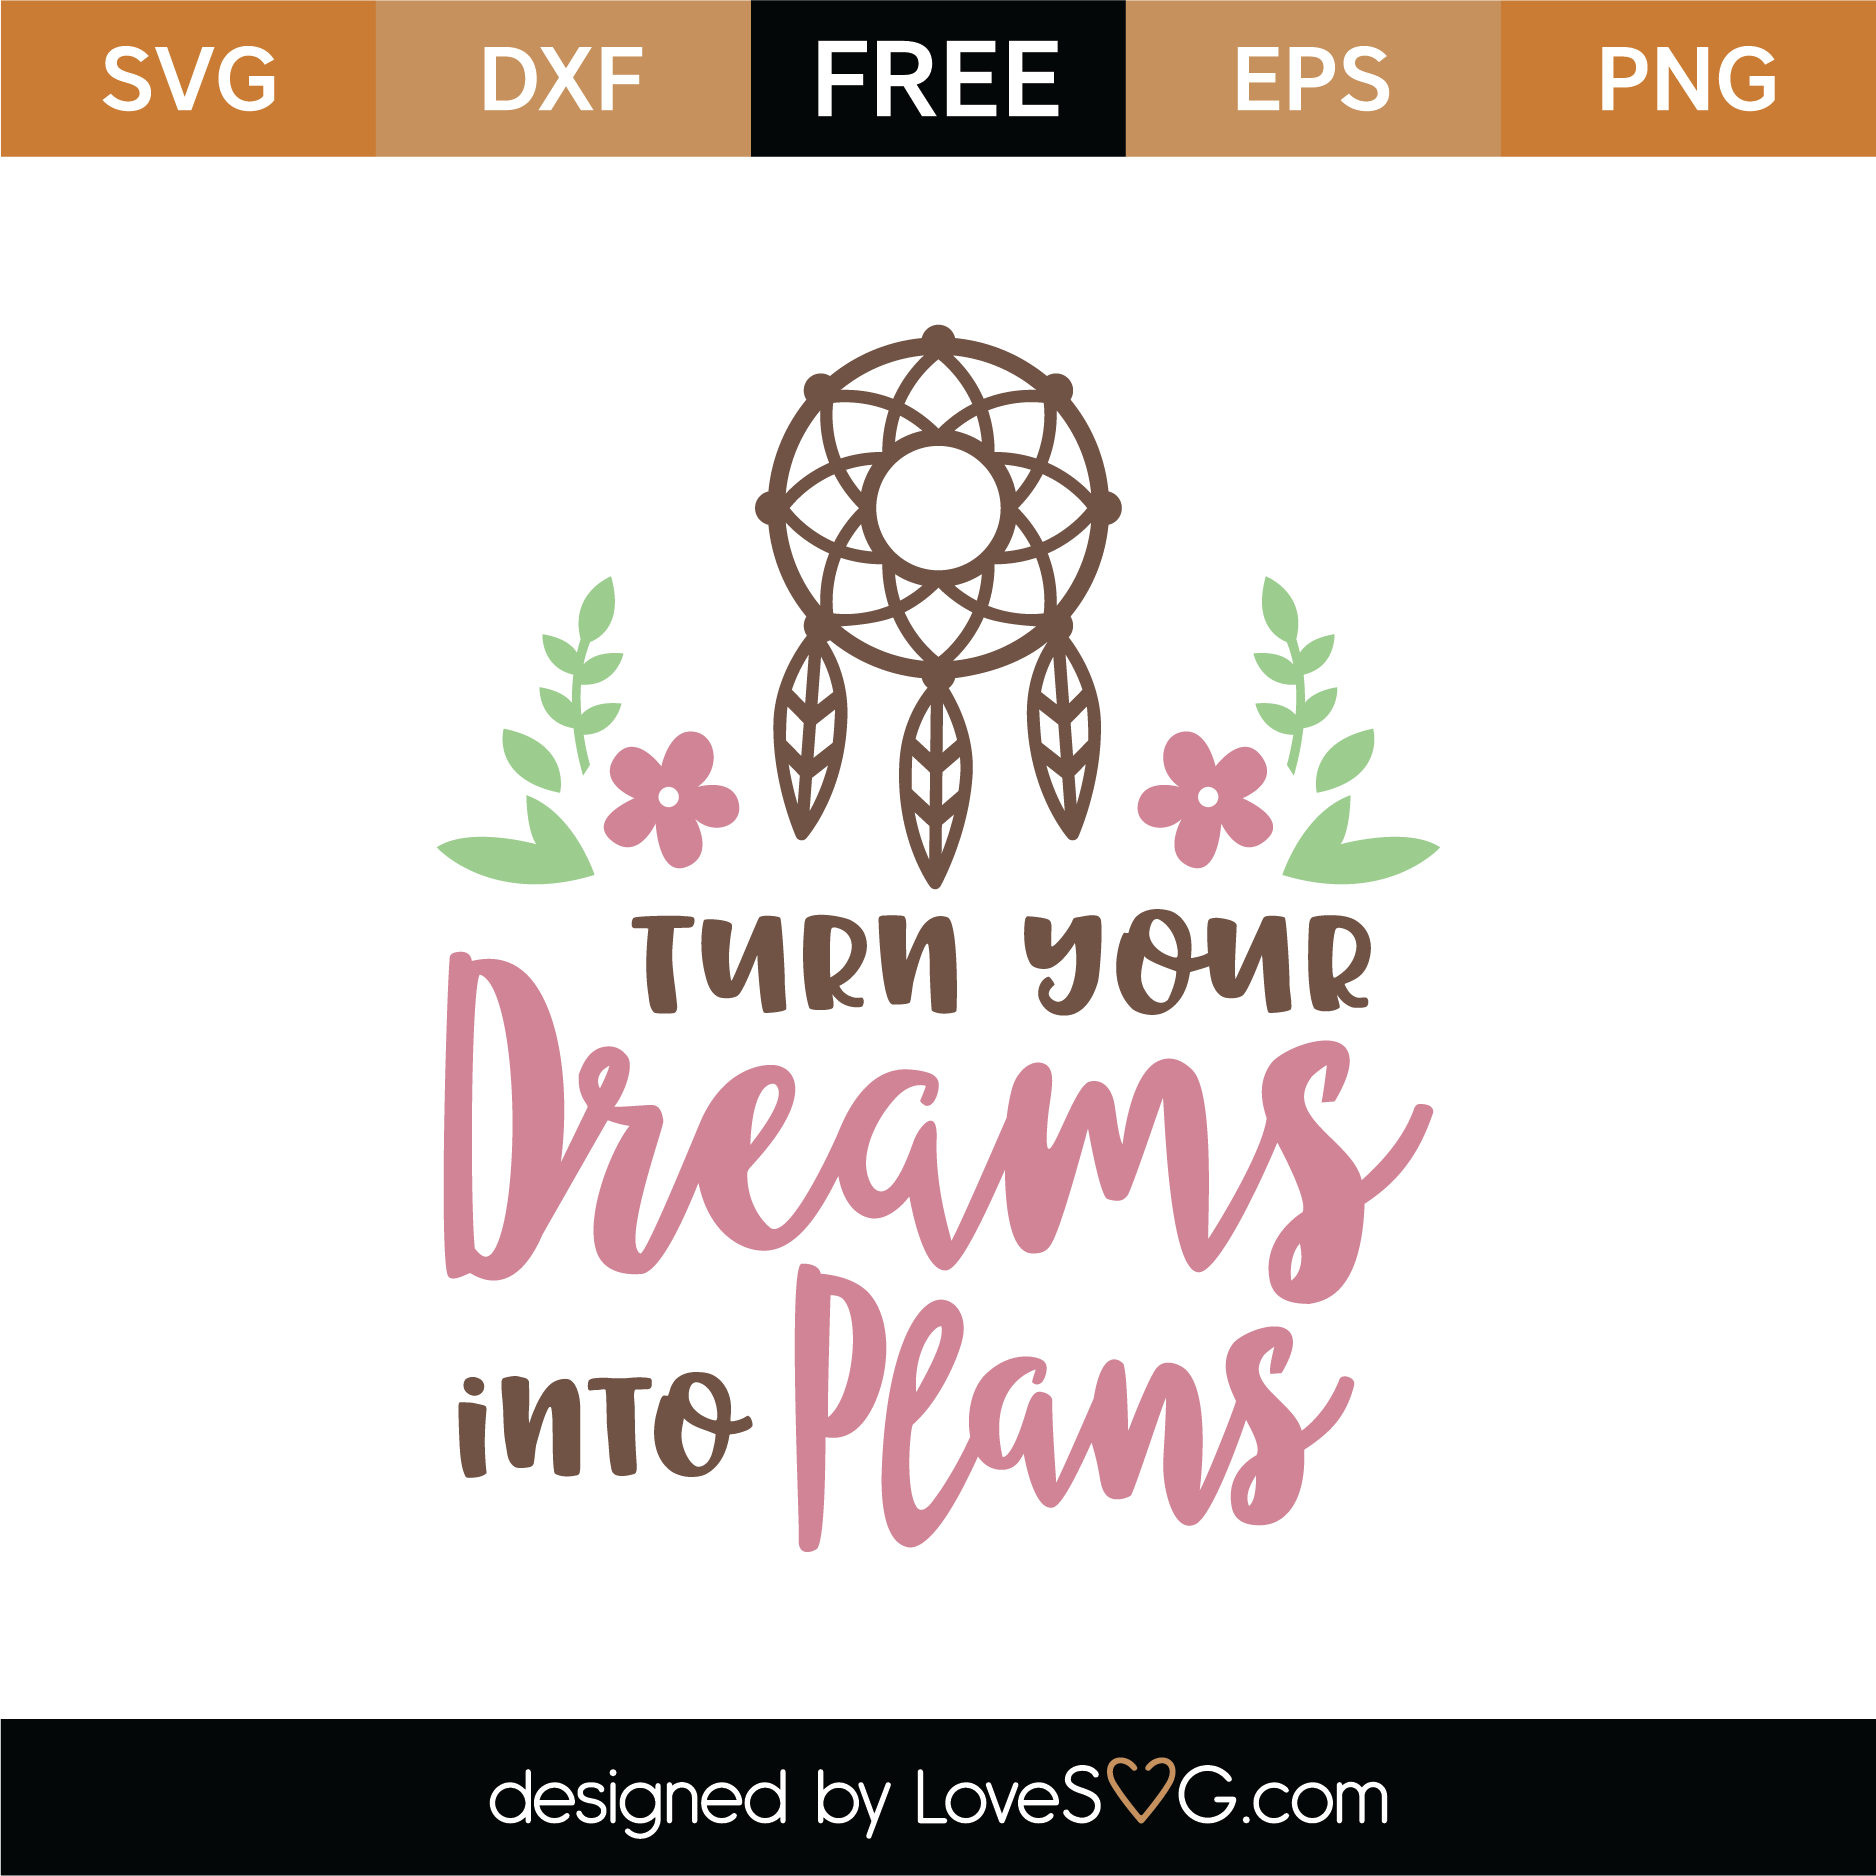 Download Free Turn Your Dreams Into Plans SVG Cut File | Lovesvg.com